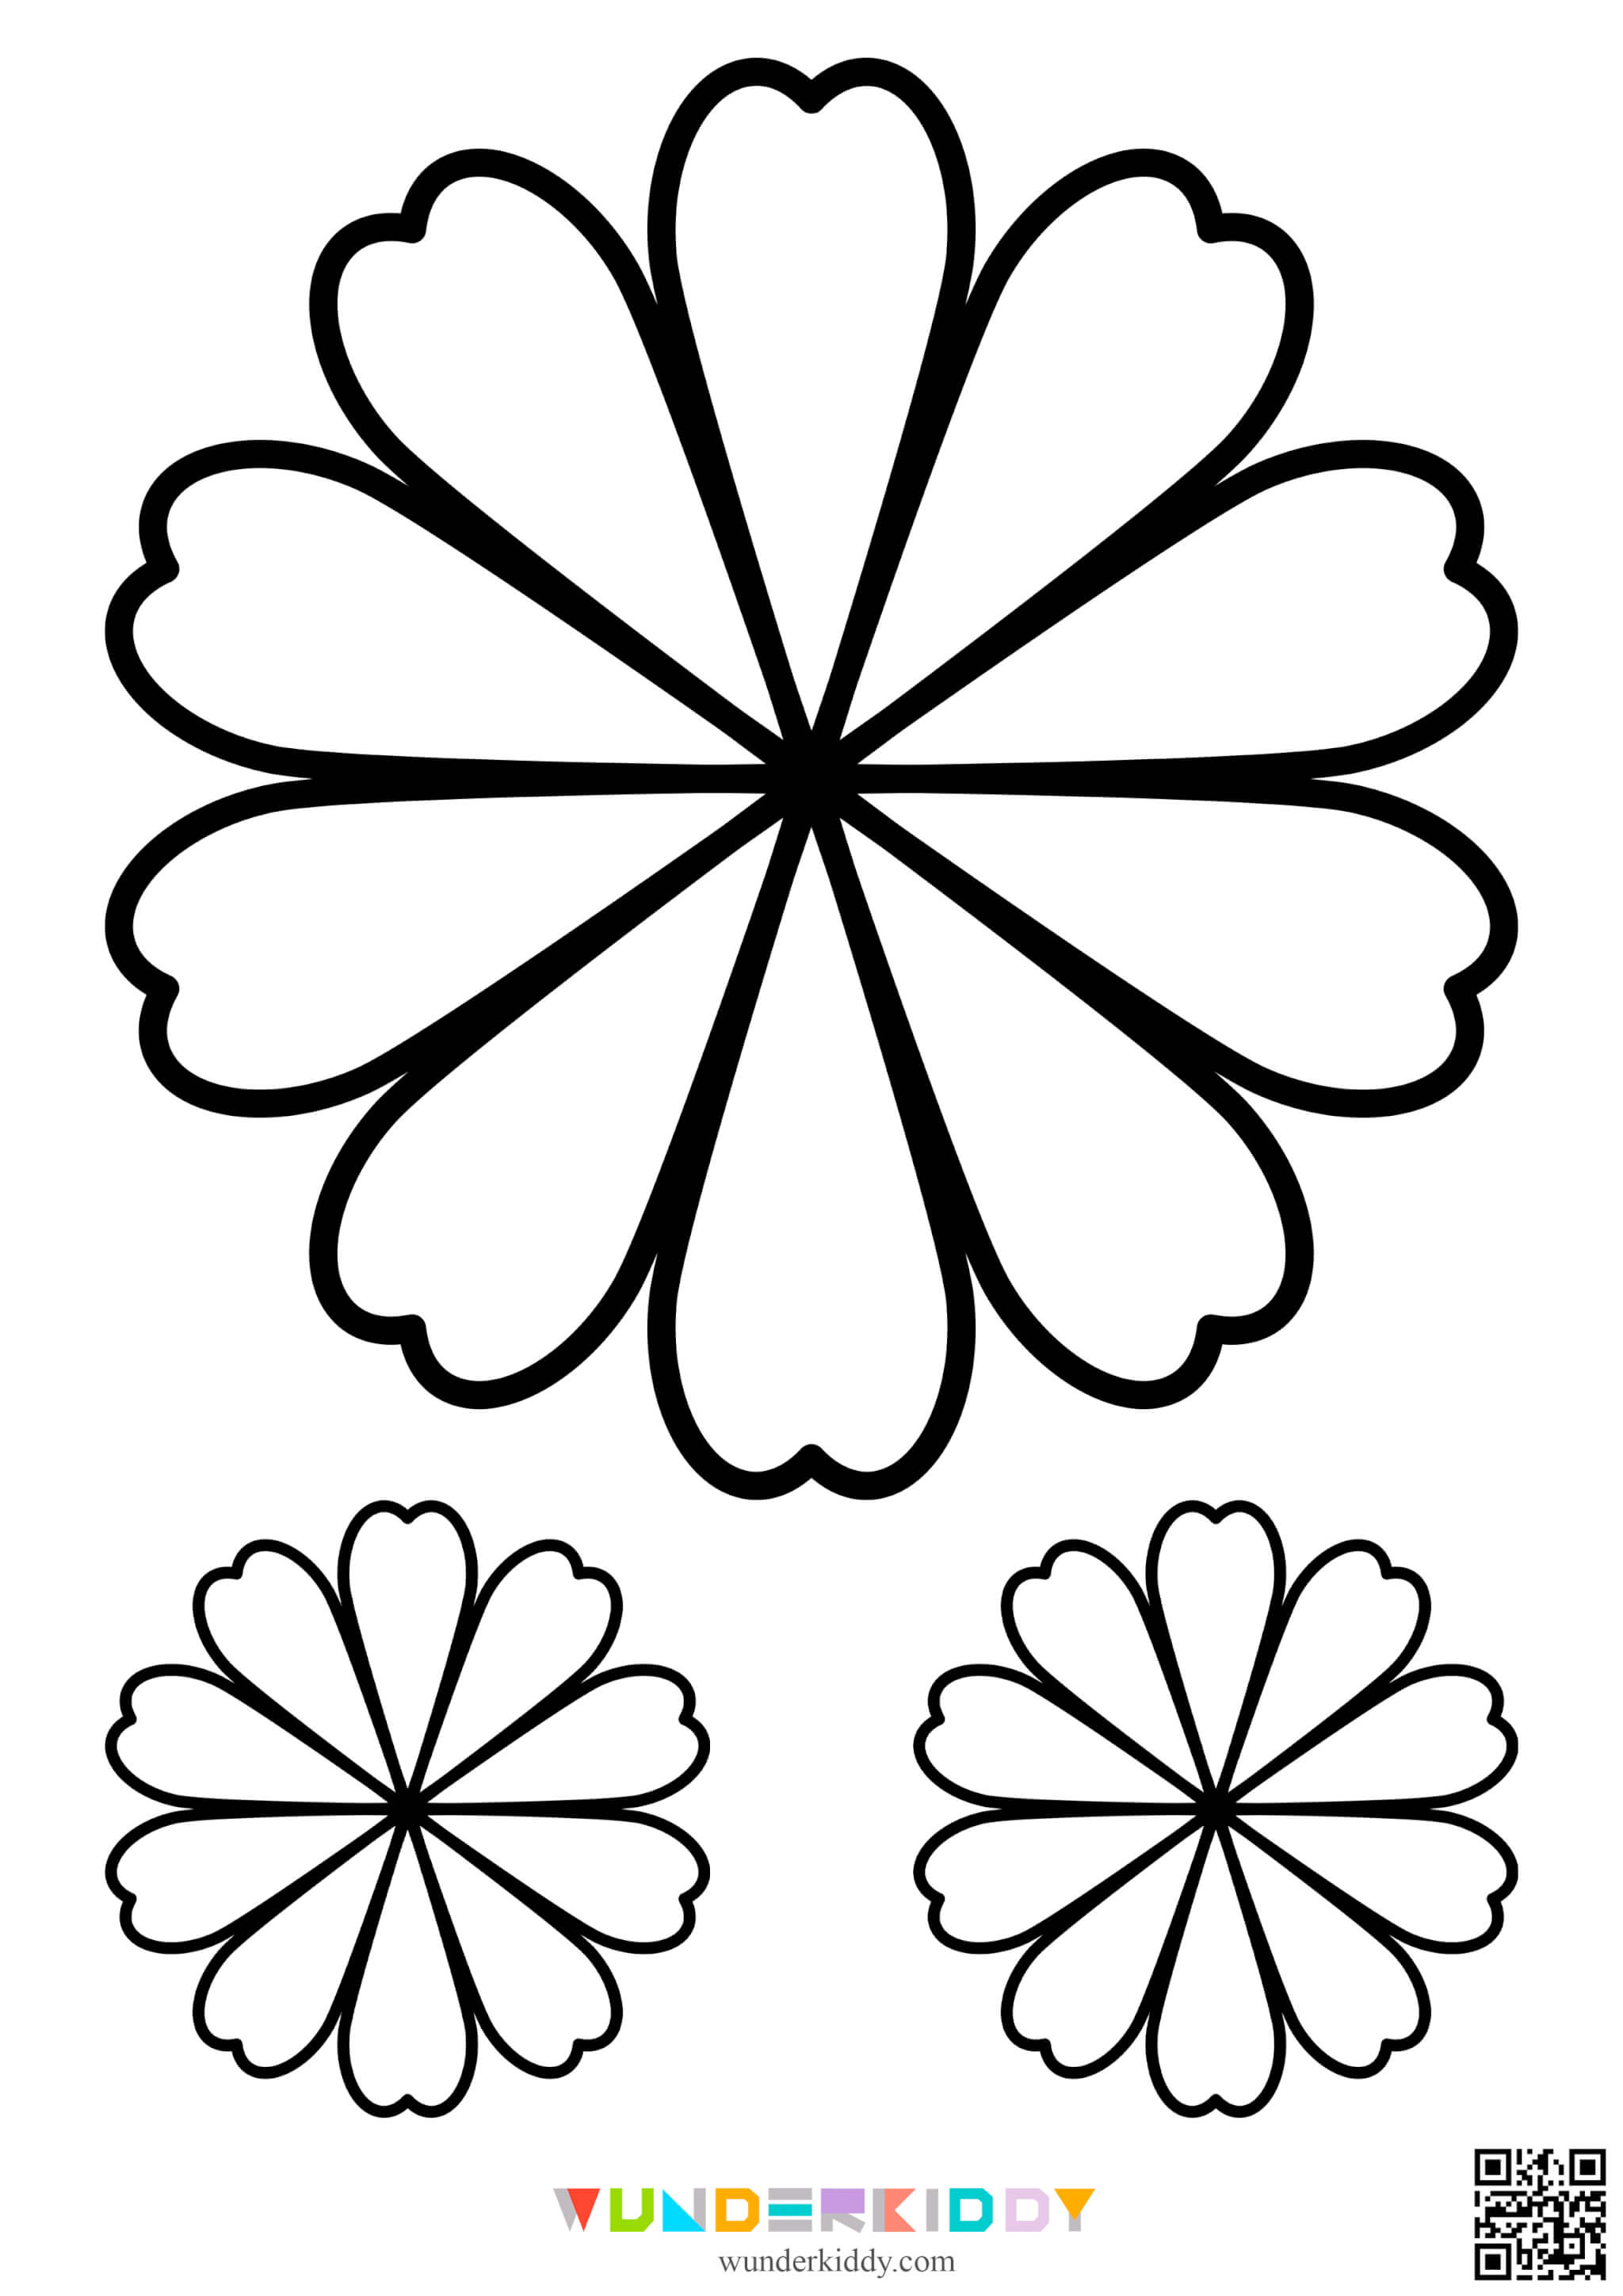 Simple Flower Templates - Image 9